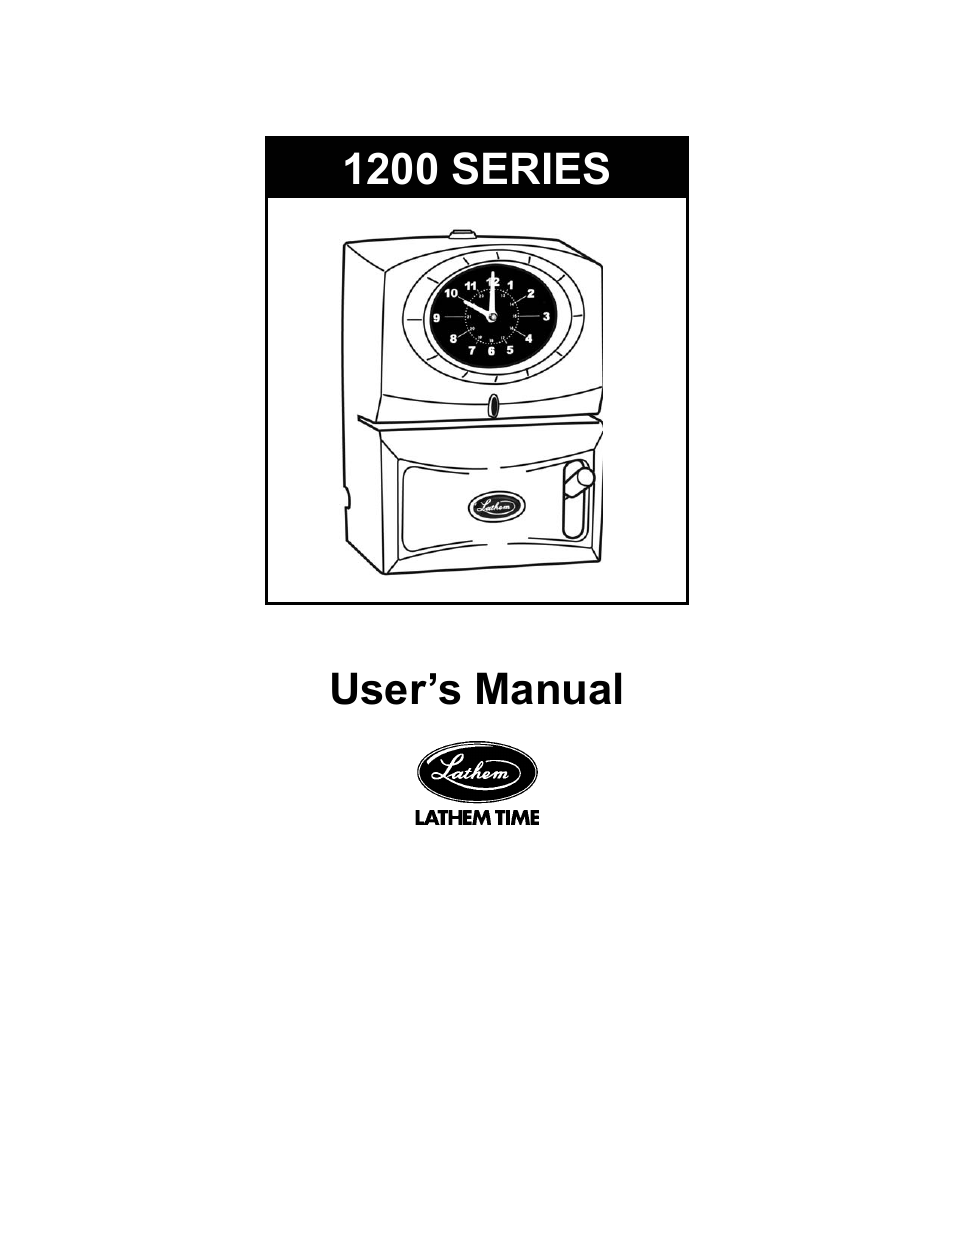 1200 Series